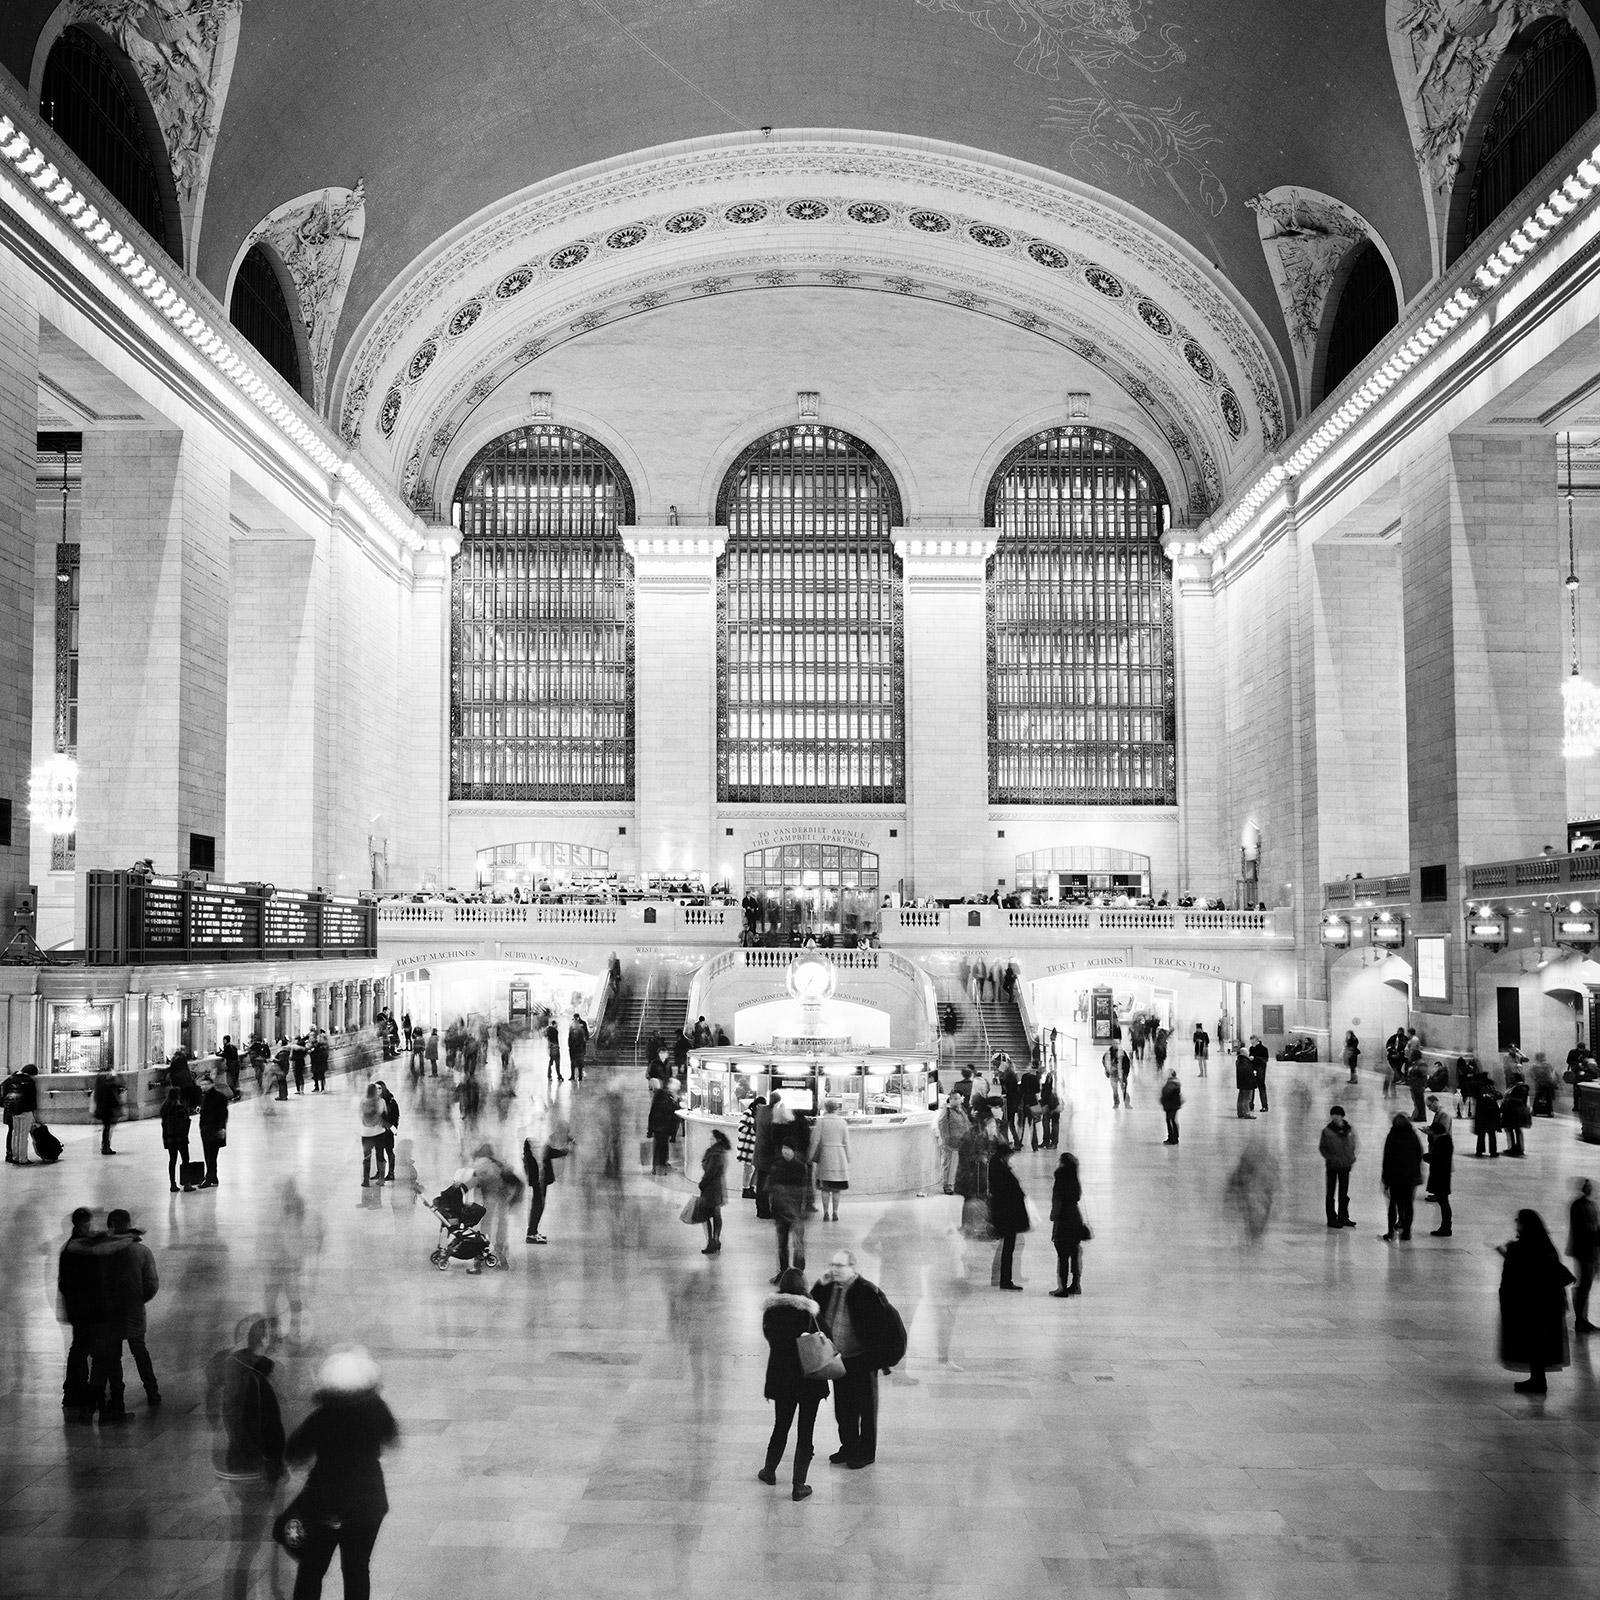 Black and White Photograph Gerald Berghammer - Grand Central Station, New York City, photographie en noir et blanc, paysage urbain